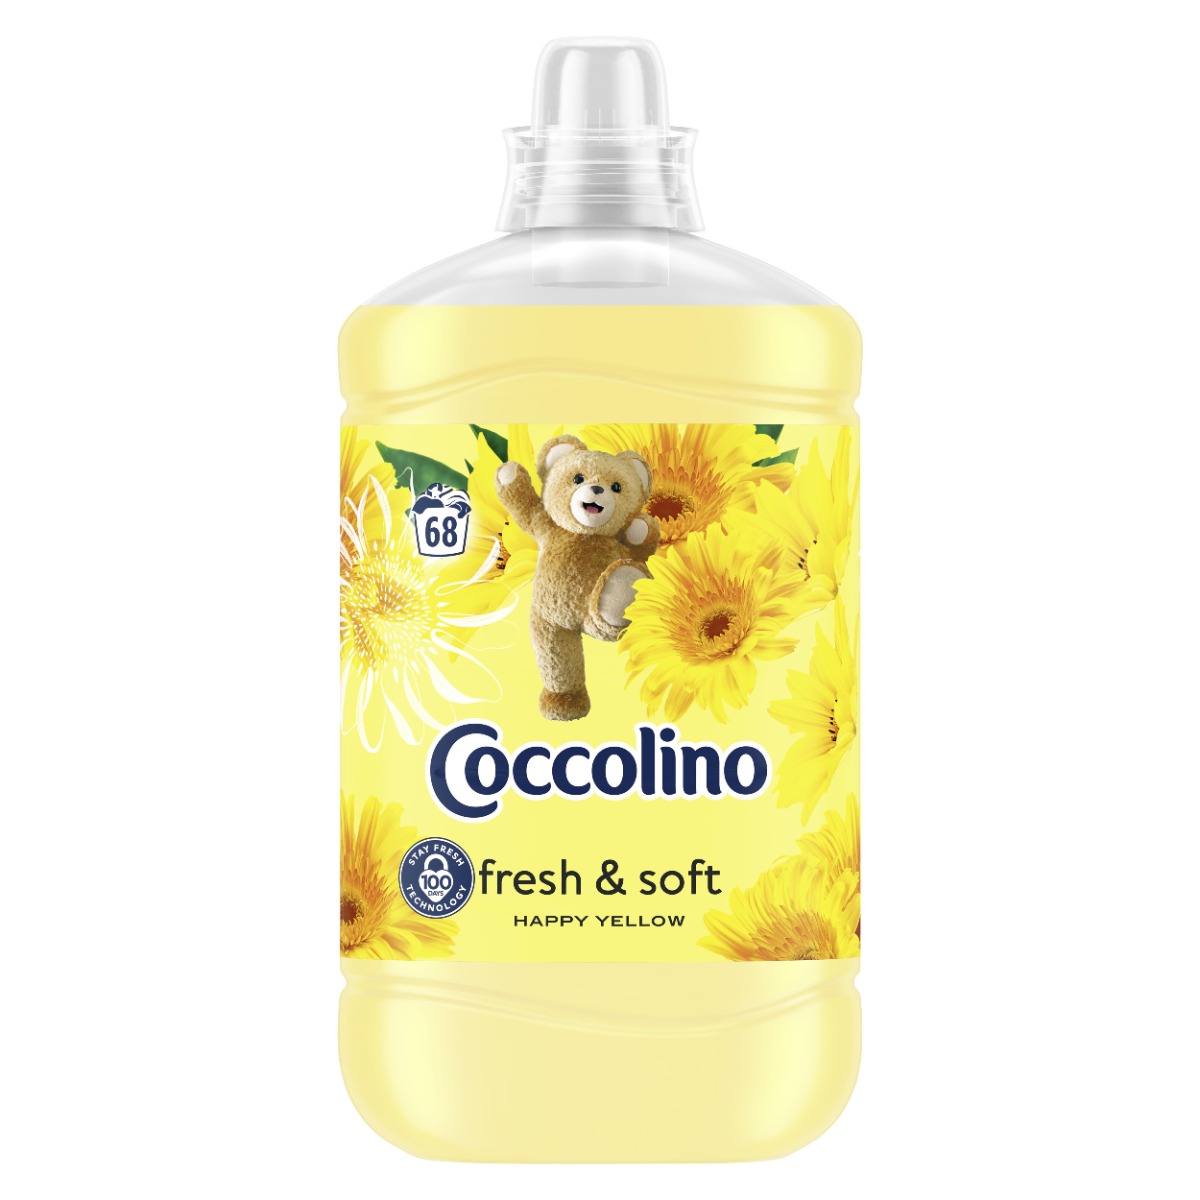 Coccolino Aviváž Happy Yellow fresh & soft 1700 ml 68 dávek Coccolino